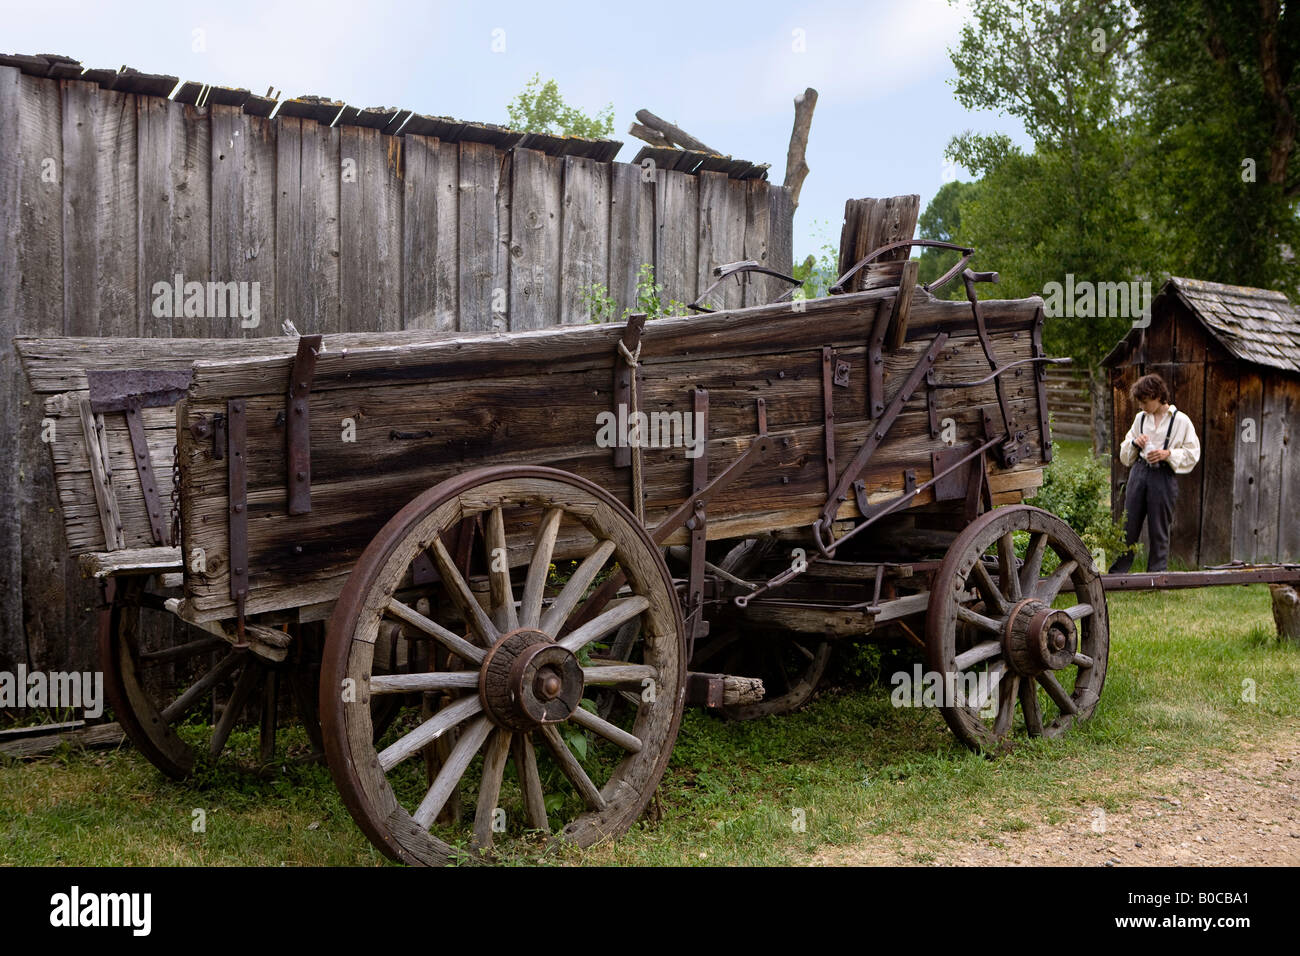 Image of an old weathered horse drawn buckboard wagon Stock Photo